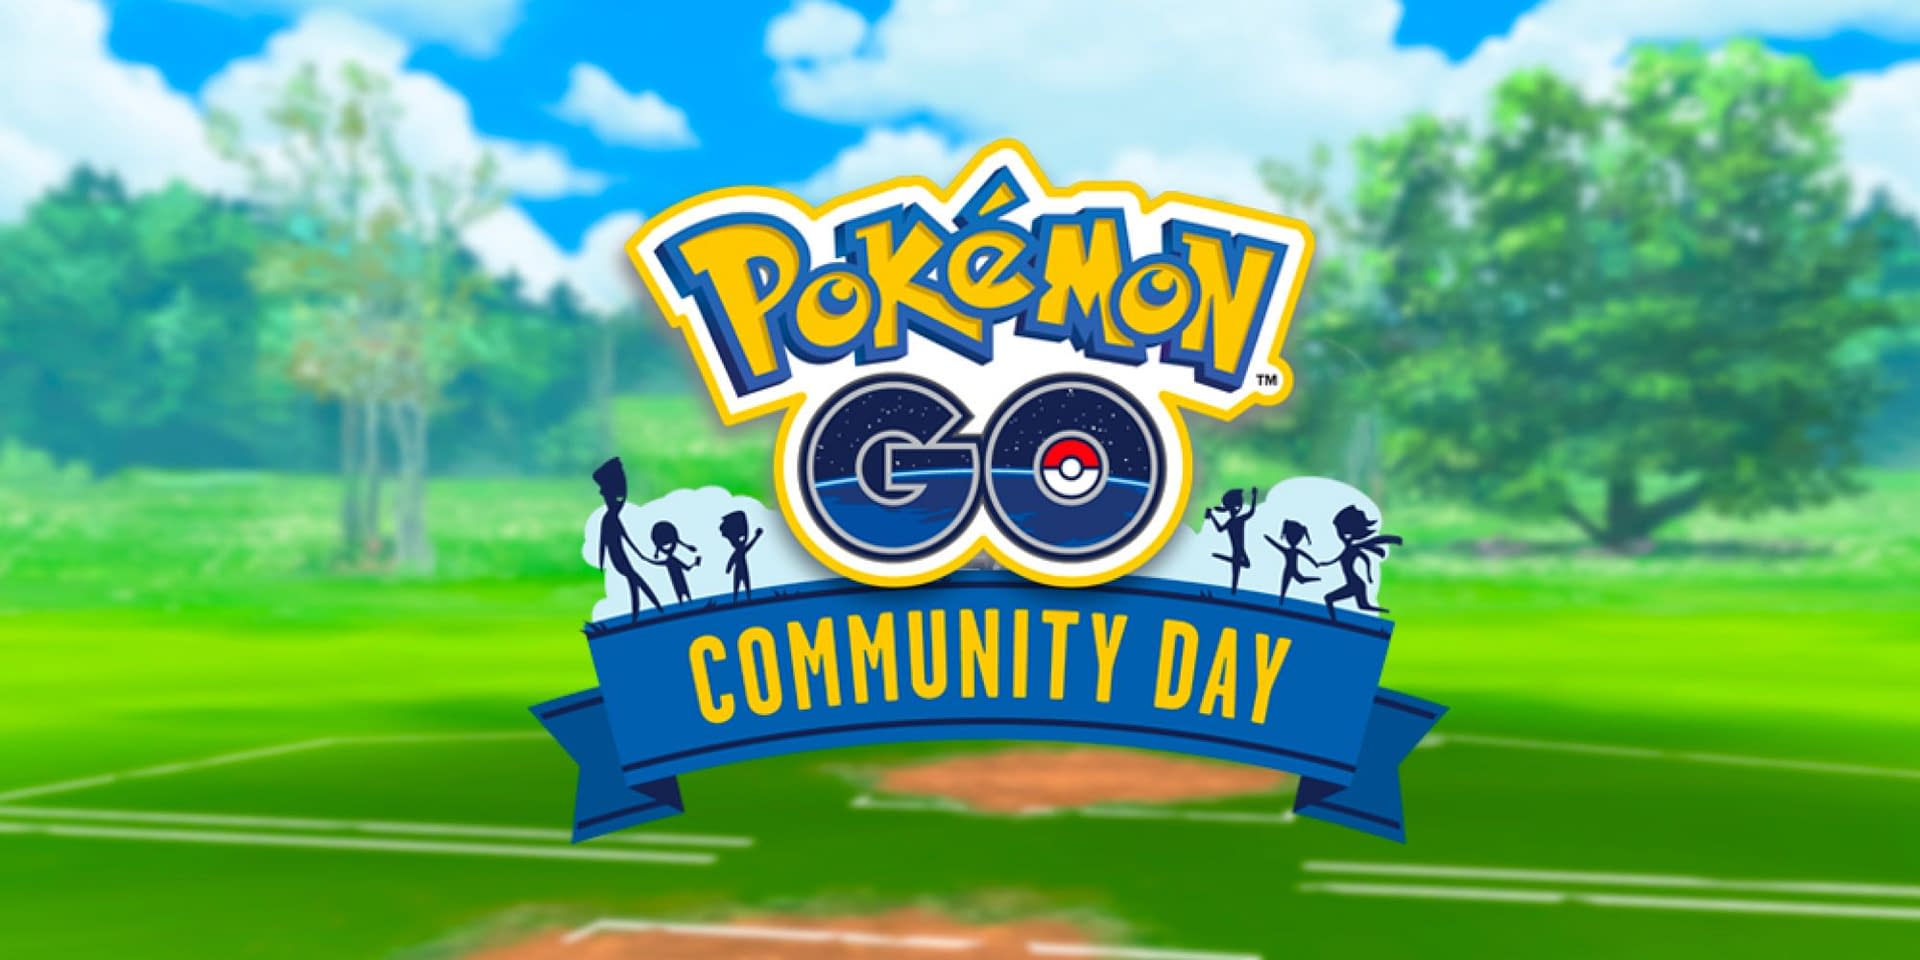 Pokémon GO Announced December 2020 Community Day With A Catch